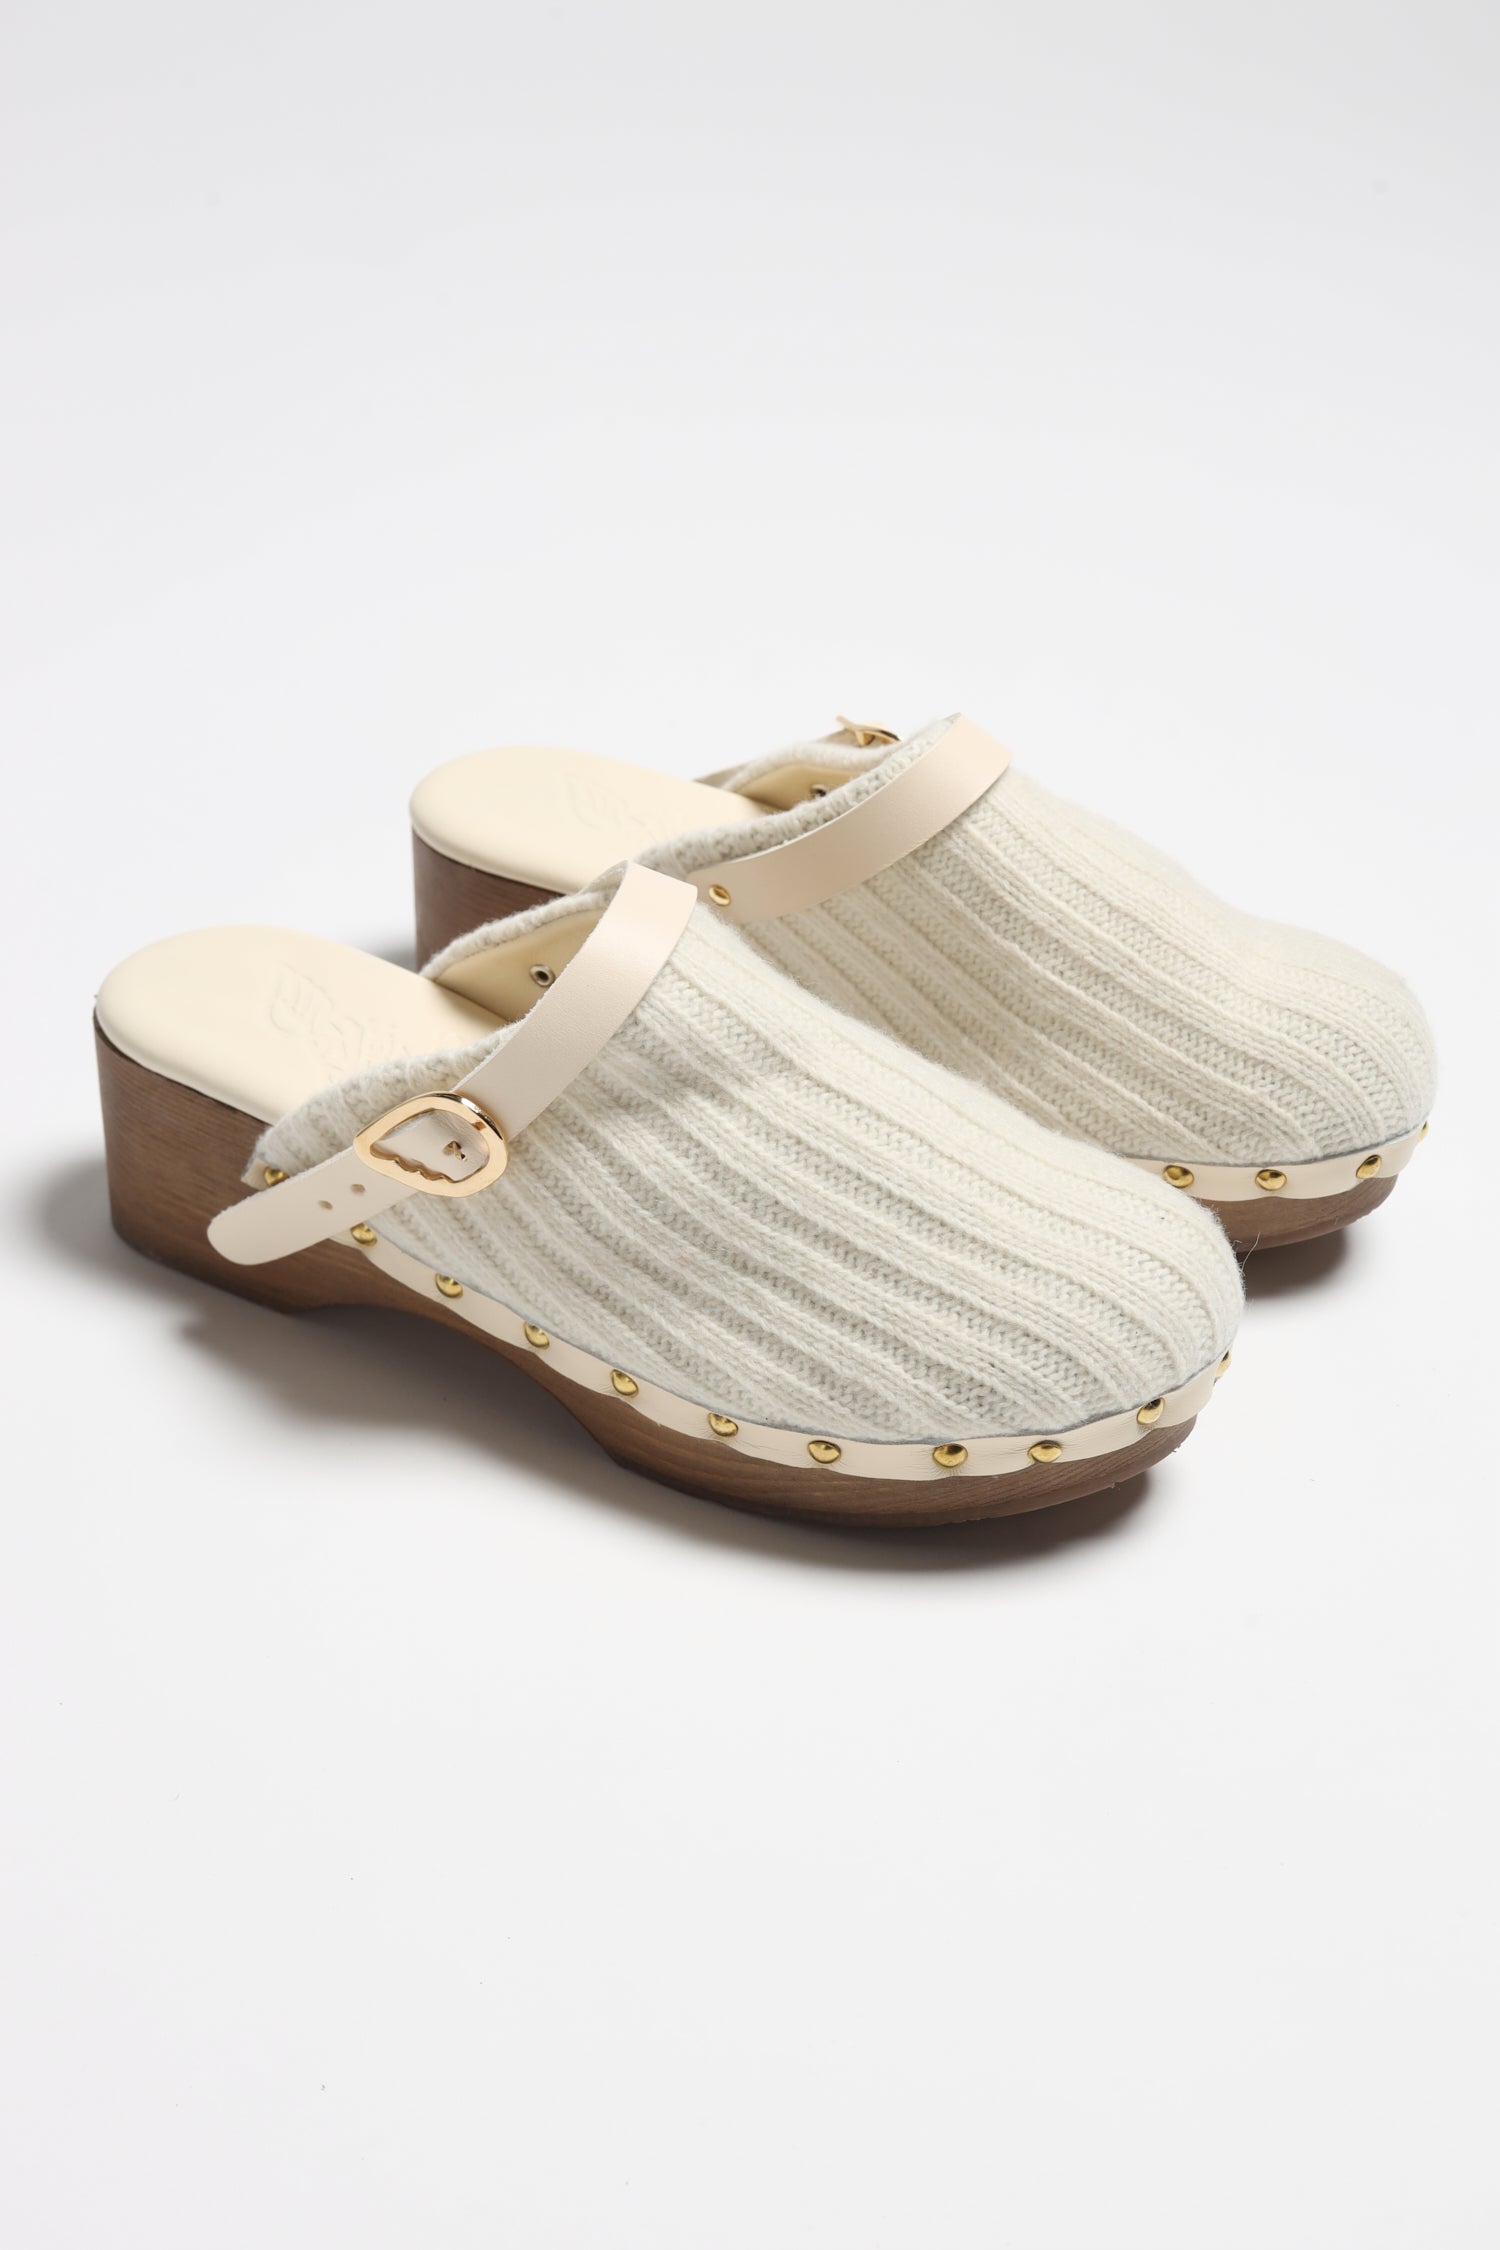 Clogs Classic in CreamAncient Greek Sandals - Anita Hass